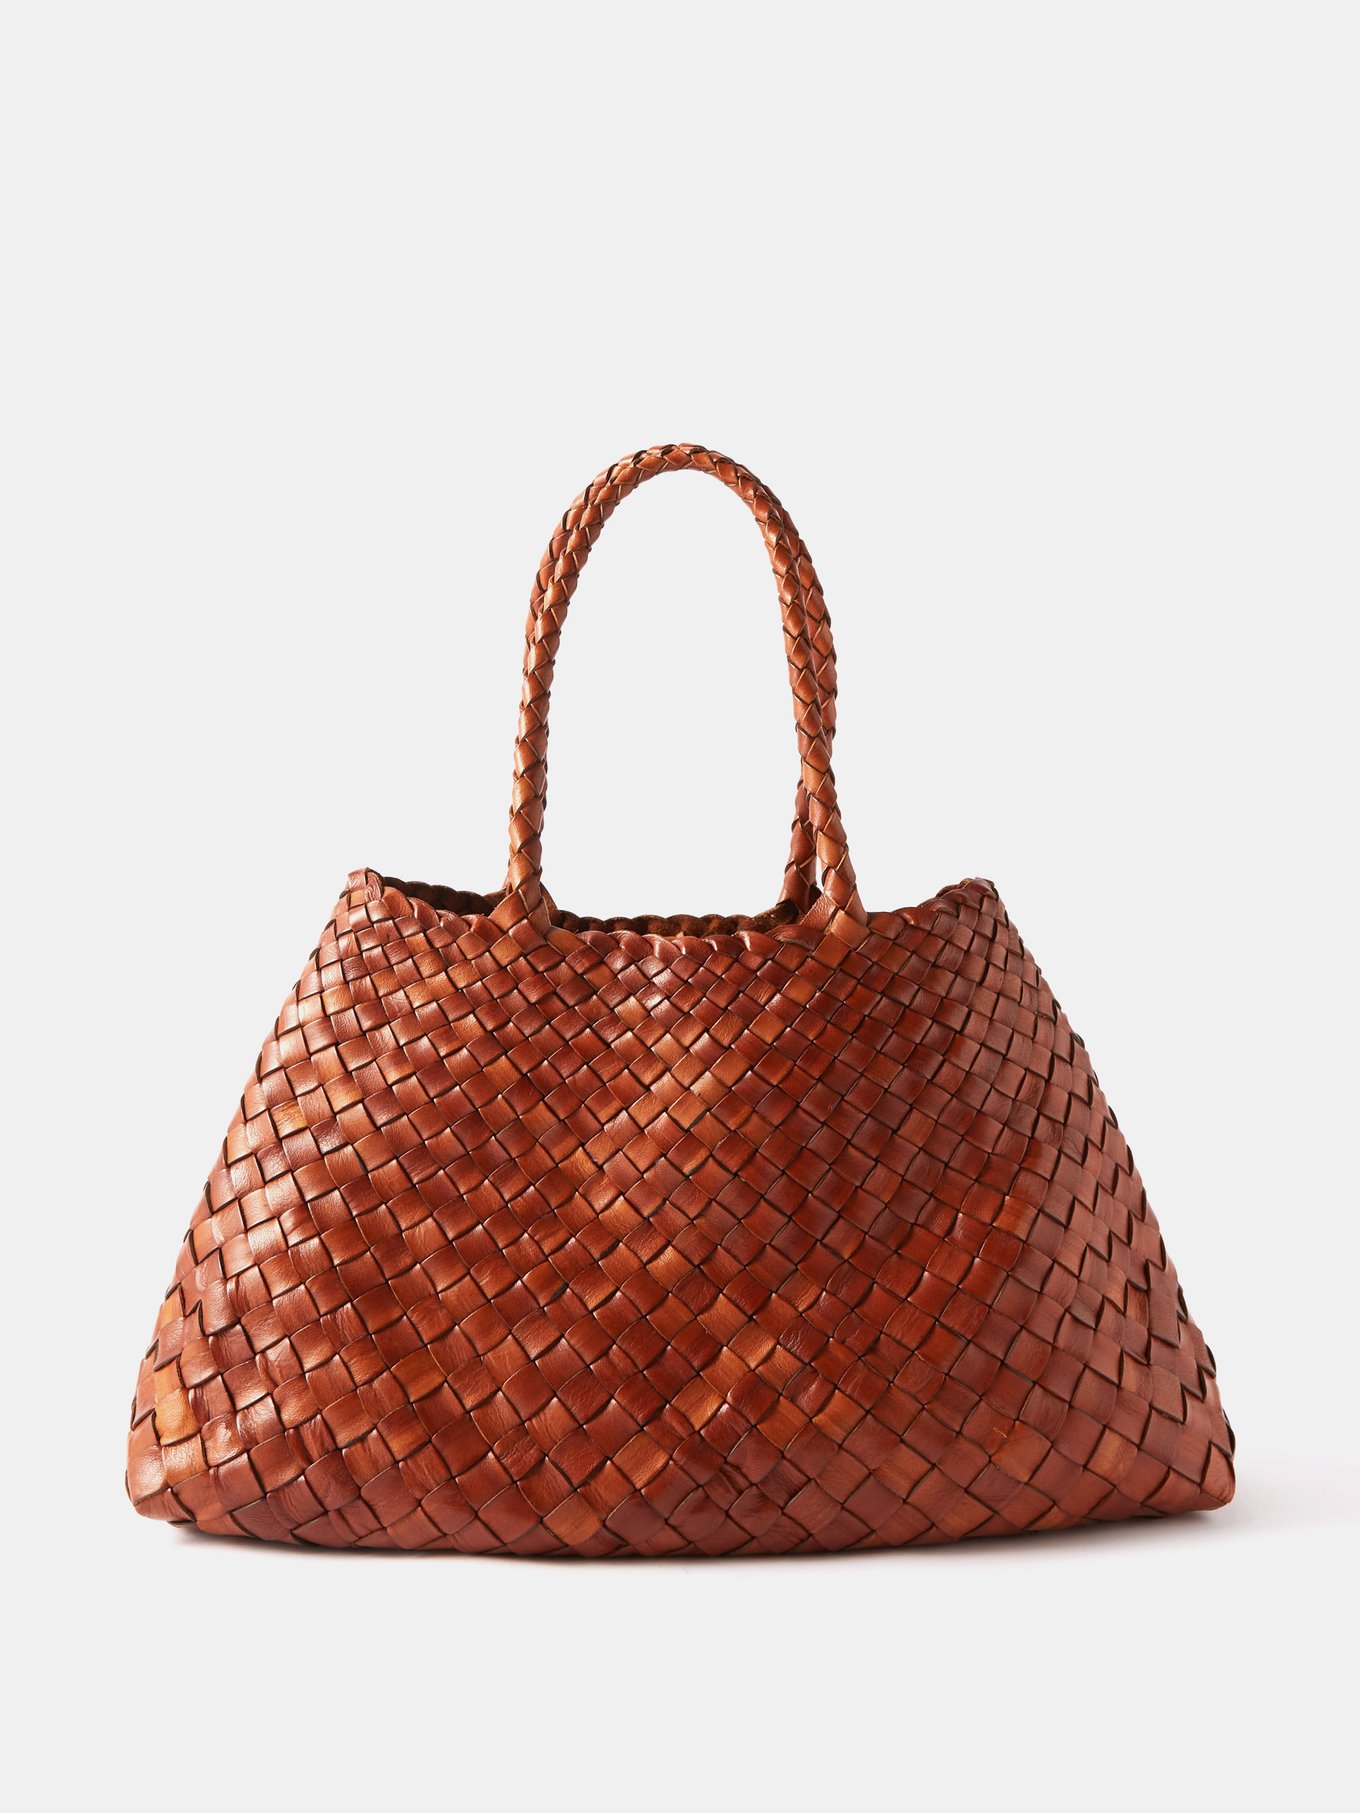 Dragon Diffusion - Santa Croce Big Red Woven Leather Bag